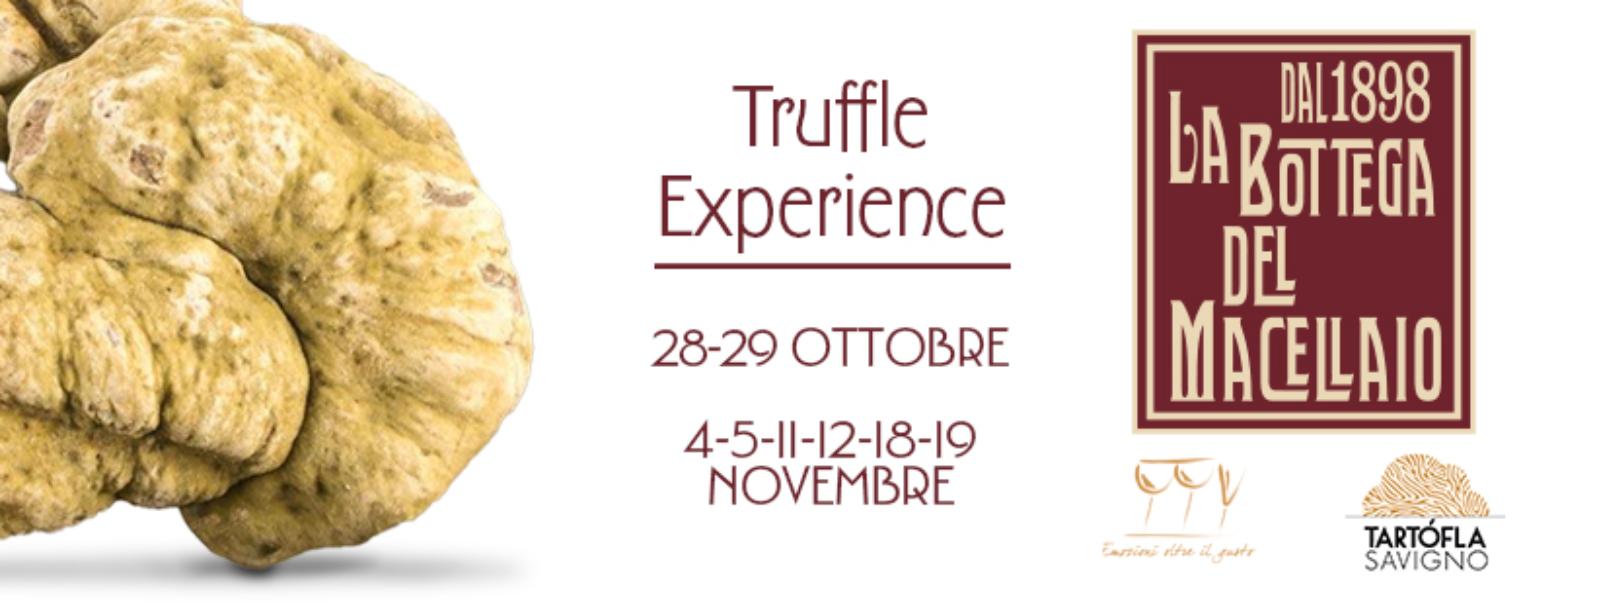 Truffle Experience | Bottega del Macellaio